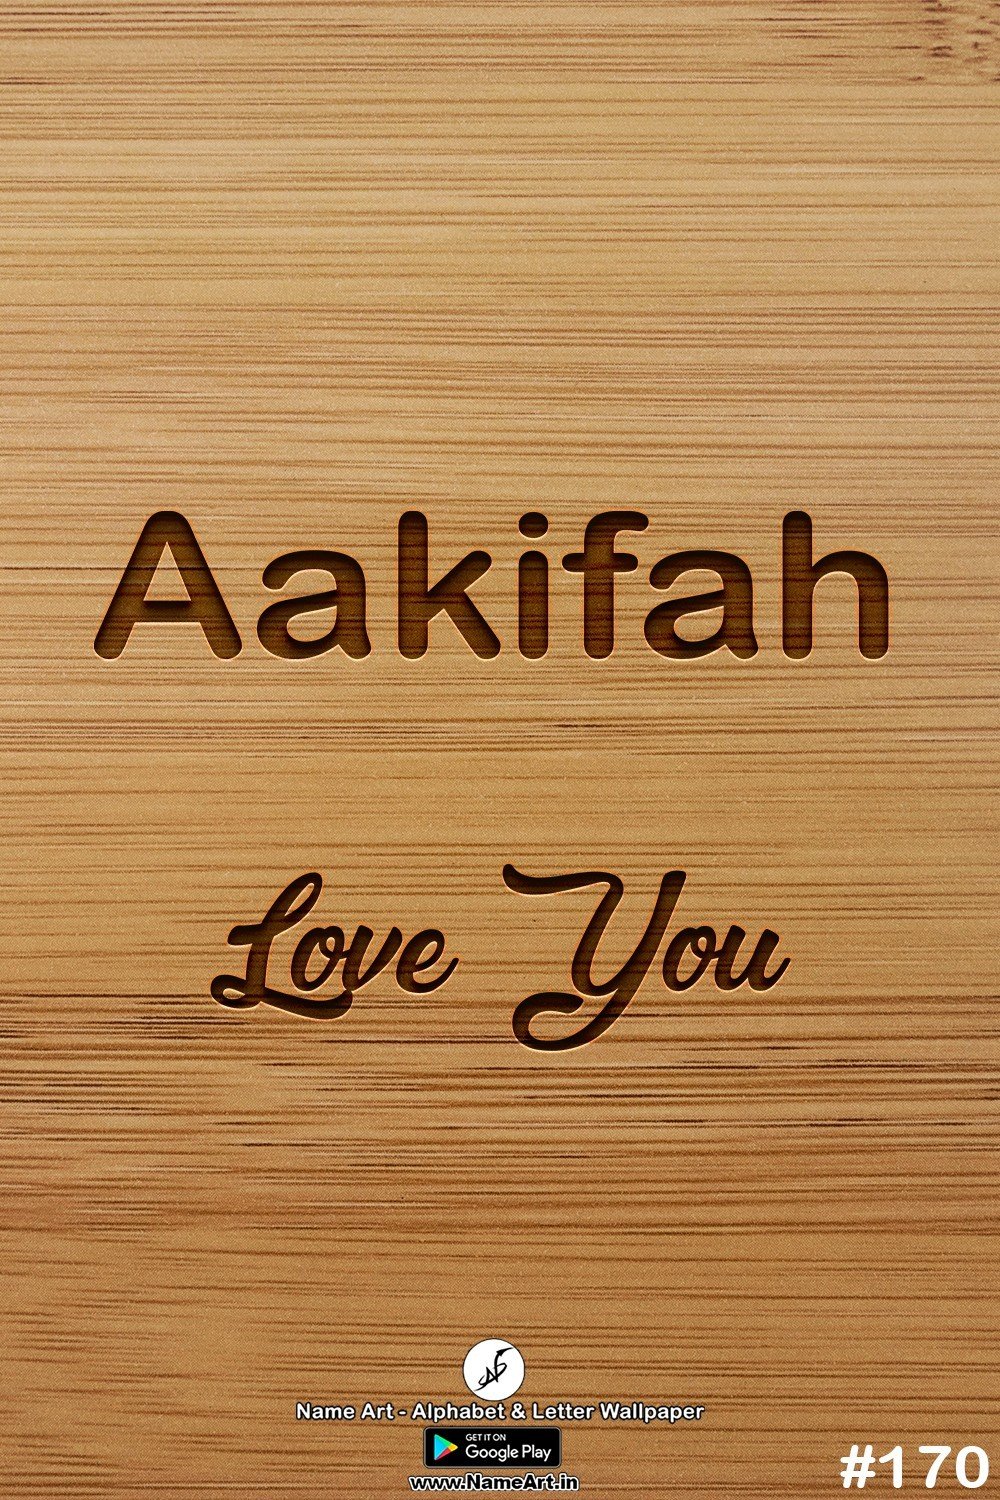 Aakifah | Whatsapp Status Aakifah | Happy Birthday Aakifah !! | New Whatsapp Status Aakifah Images |